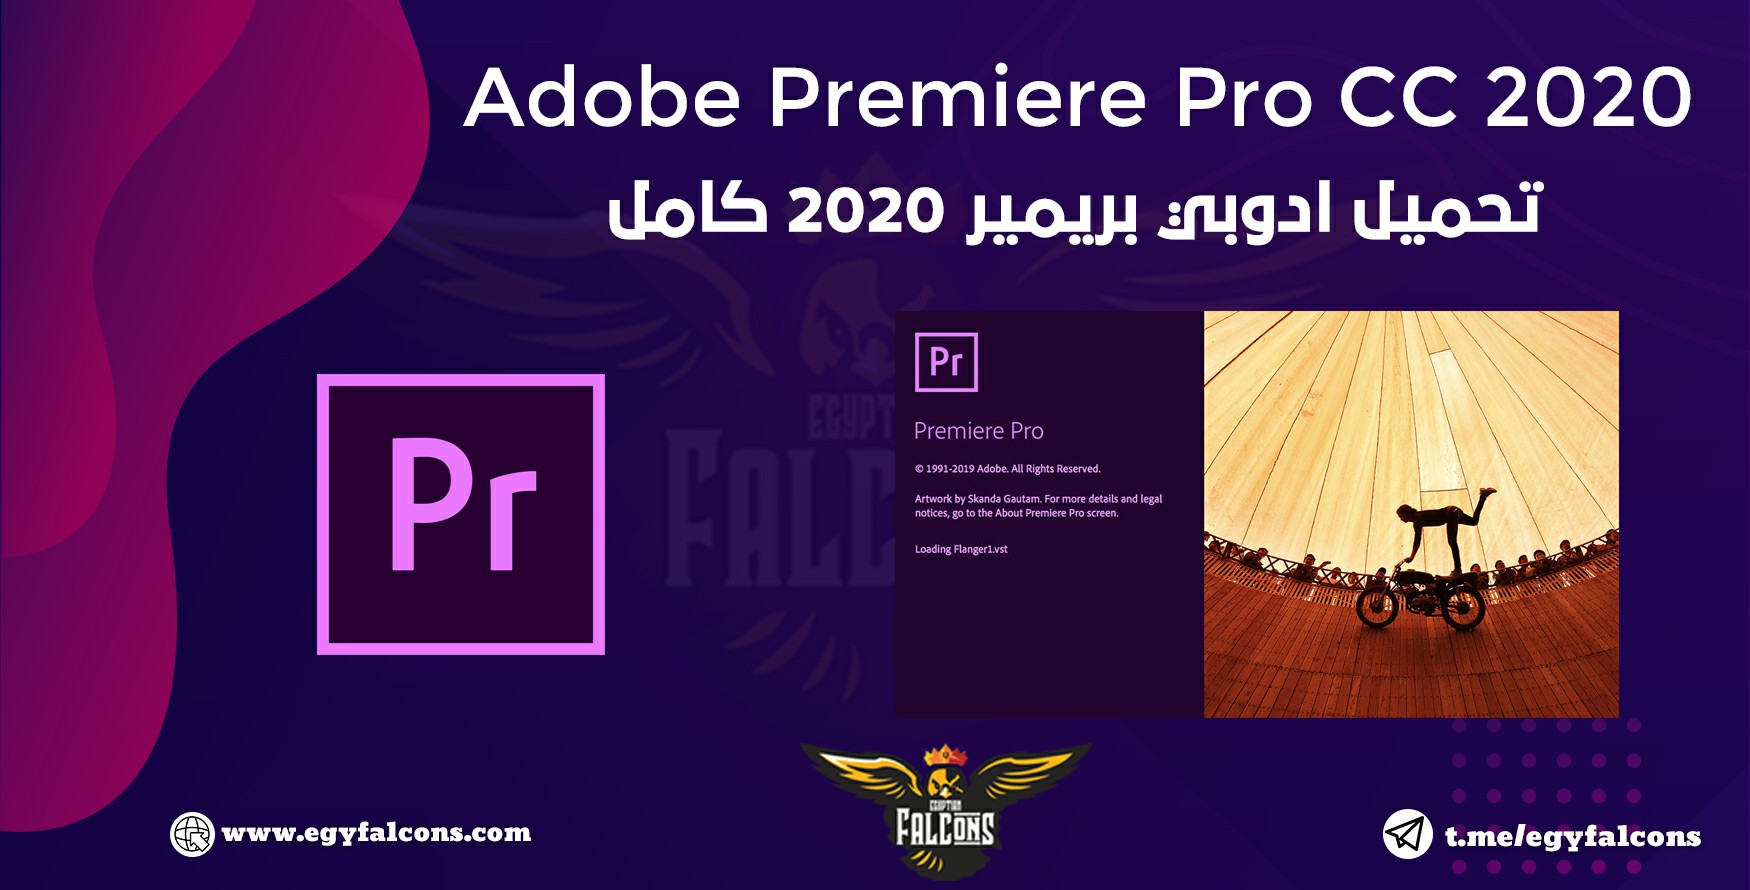 تحميل ادوبي بريمير 2020 كامل  l Adobe Premiere Pro CC 2020 Full Download